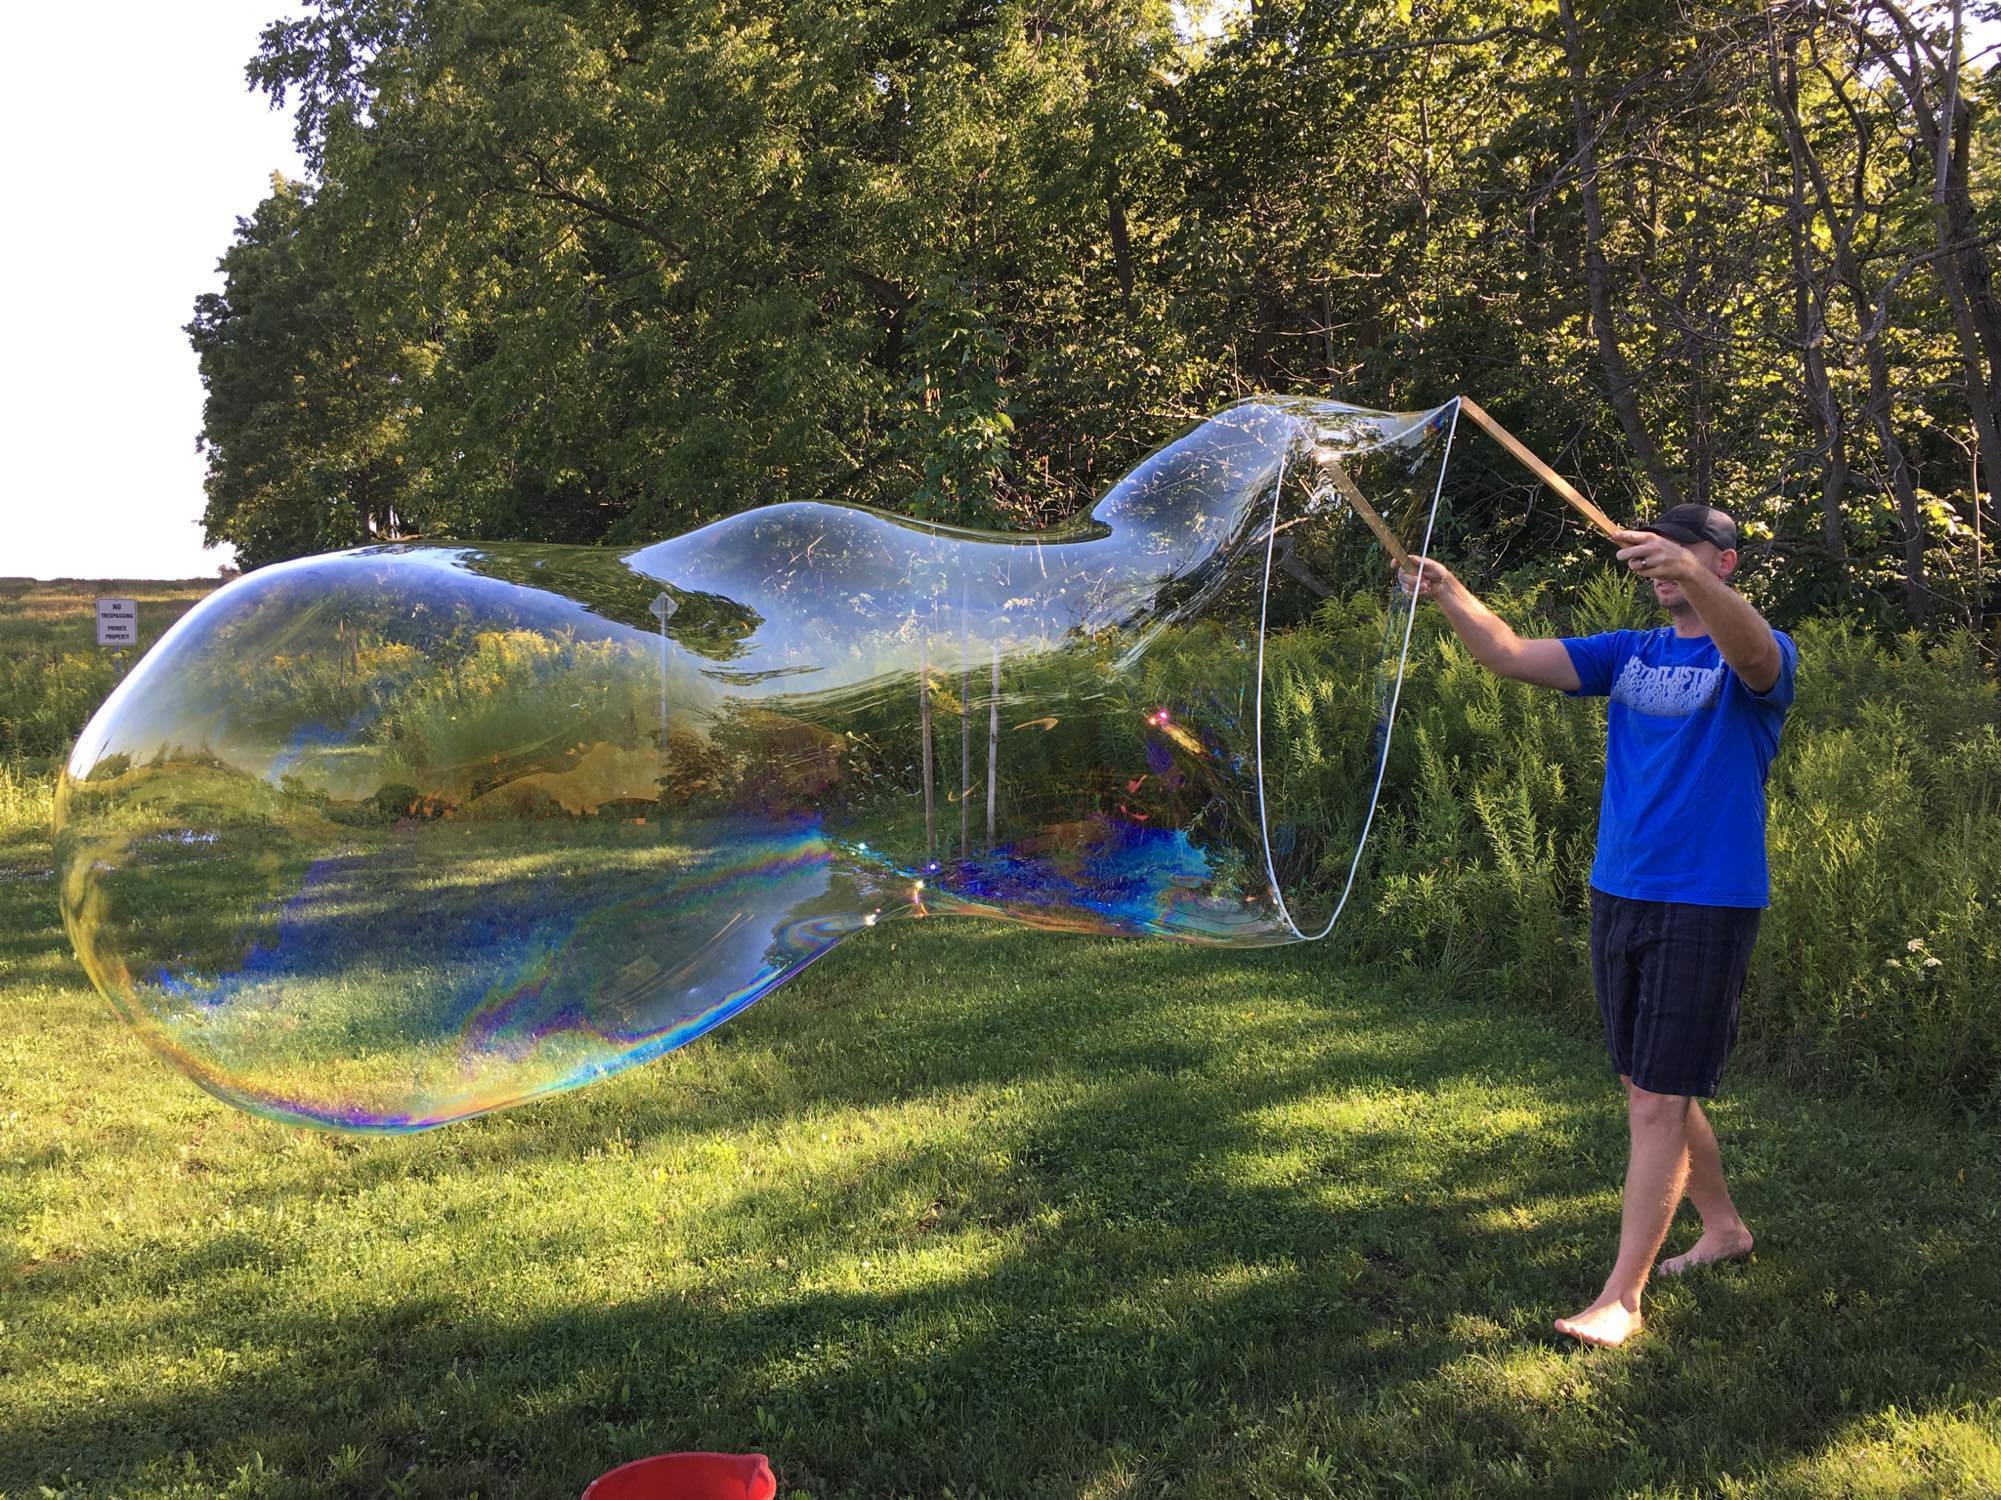 Biggest Bubbles Ever!